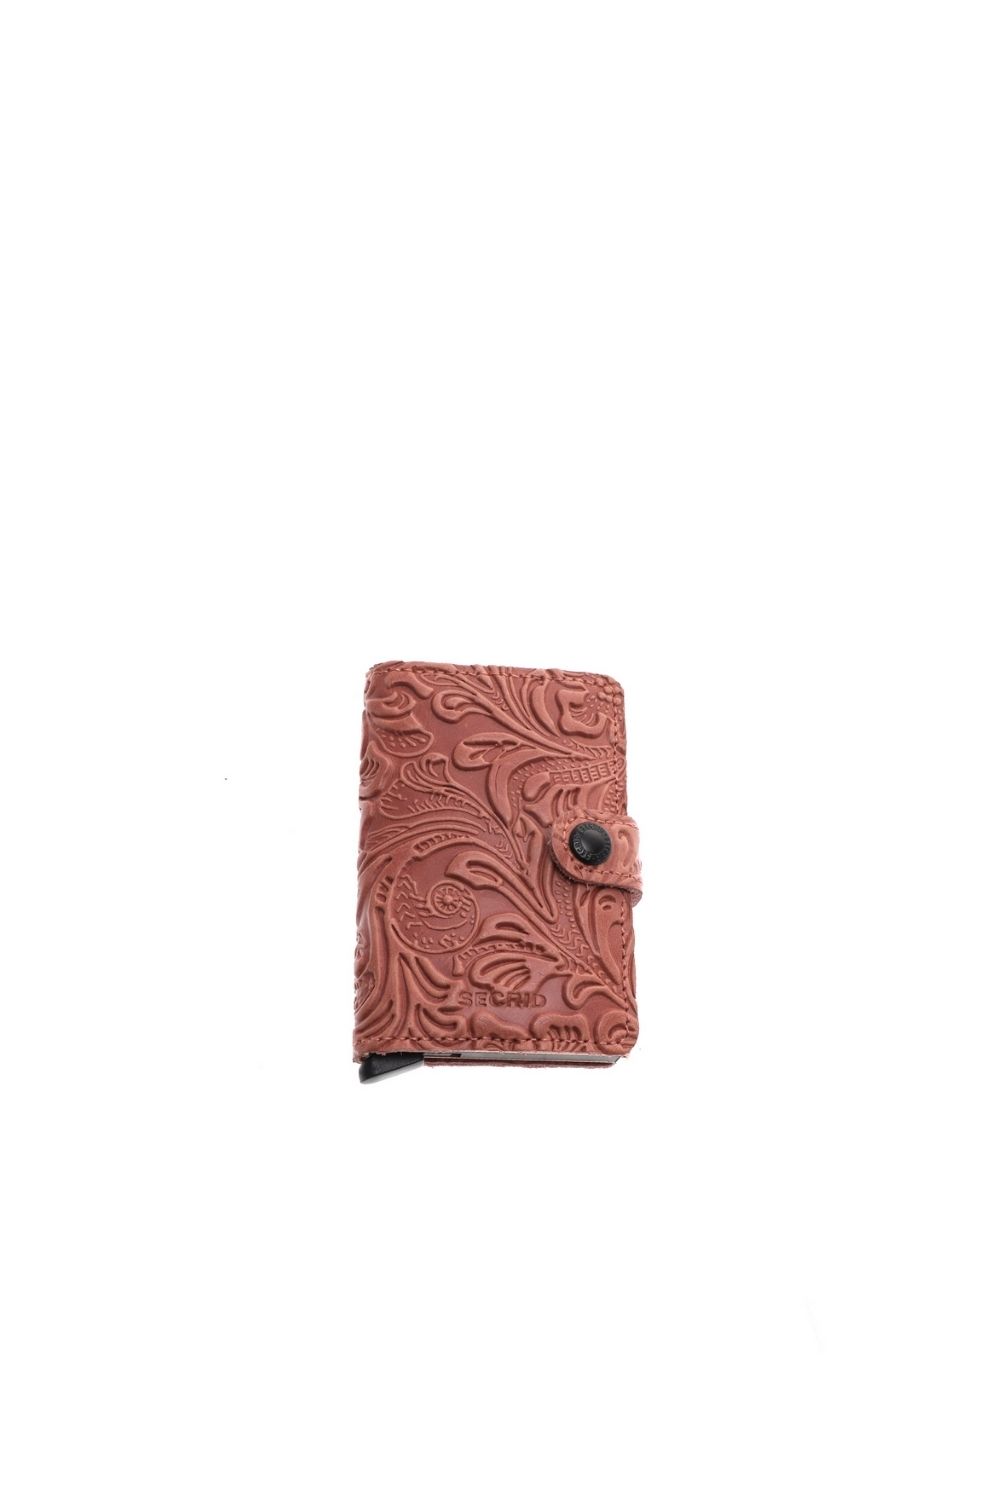 SECRID - Δερμάτινο πορτοφόλι SECRID Rose Miniwallet Ornament ροζ Γυναικεία/Αξεσουάρ/Πορτοφόλια-Μπρελόκ